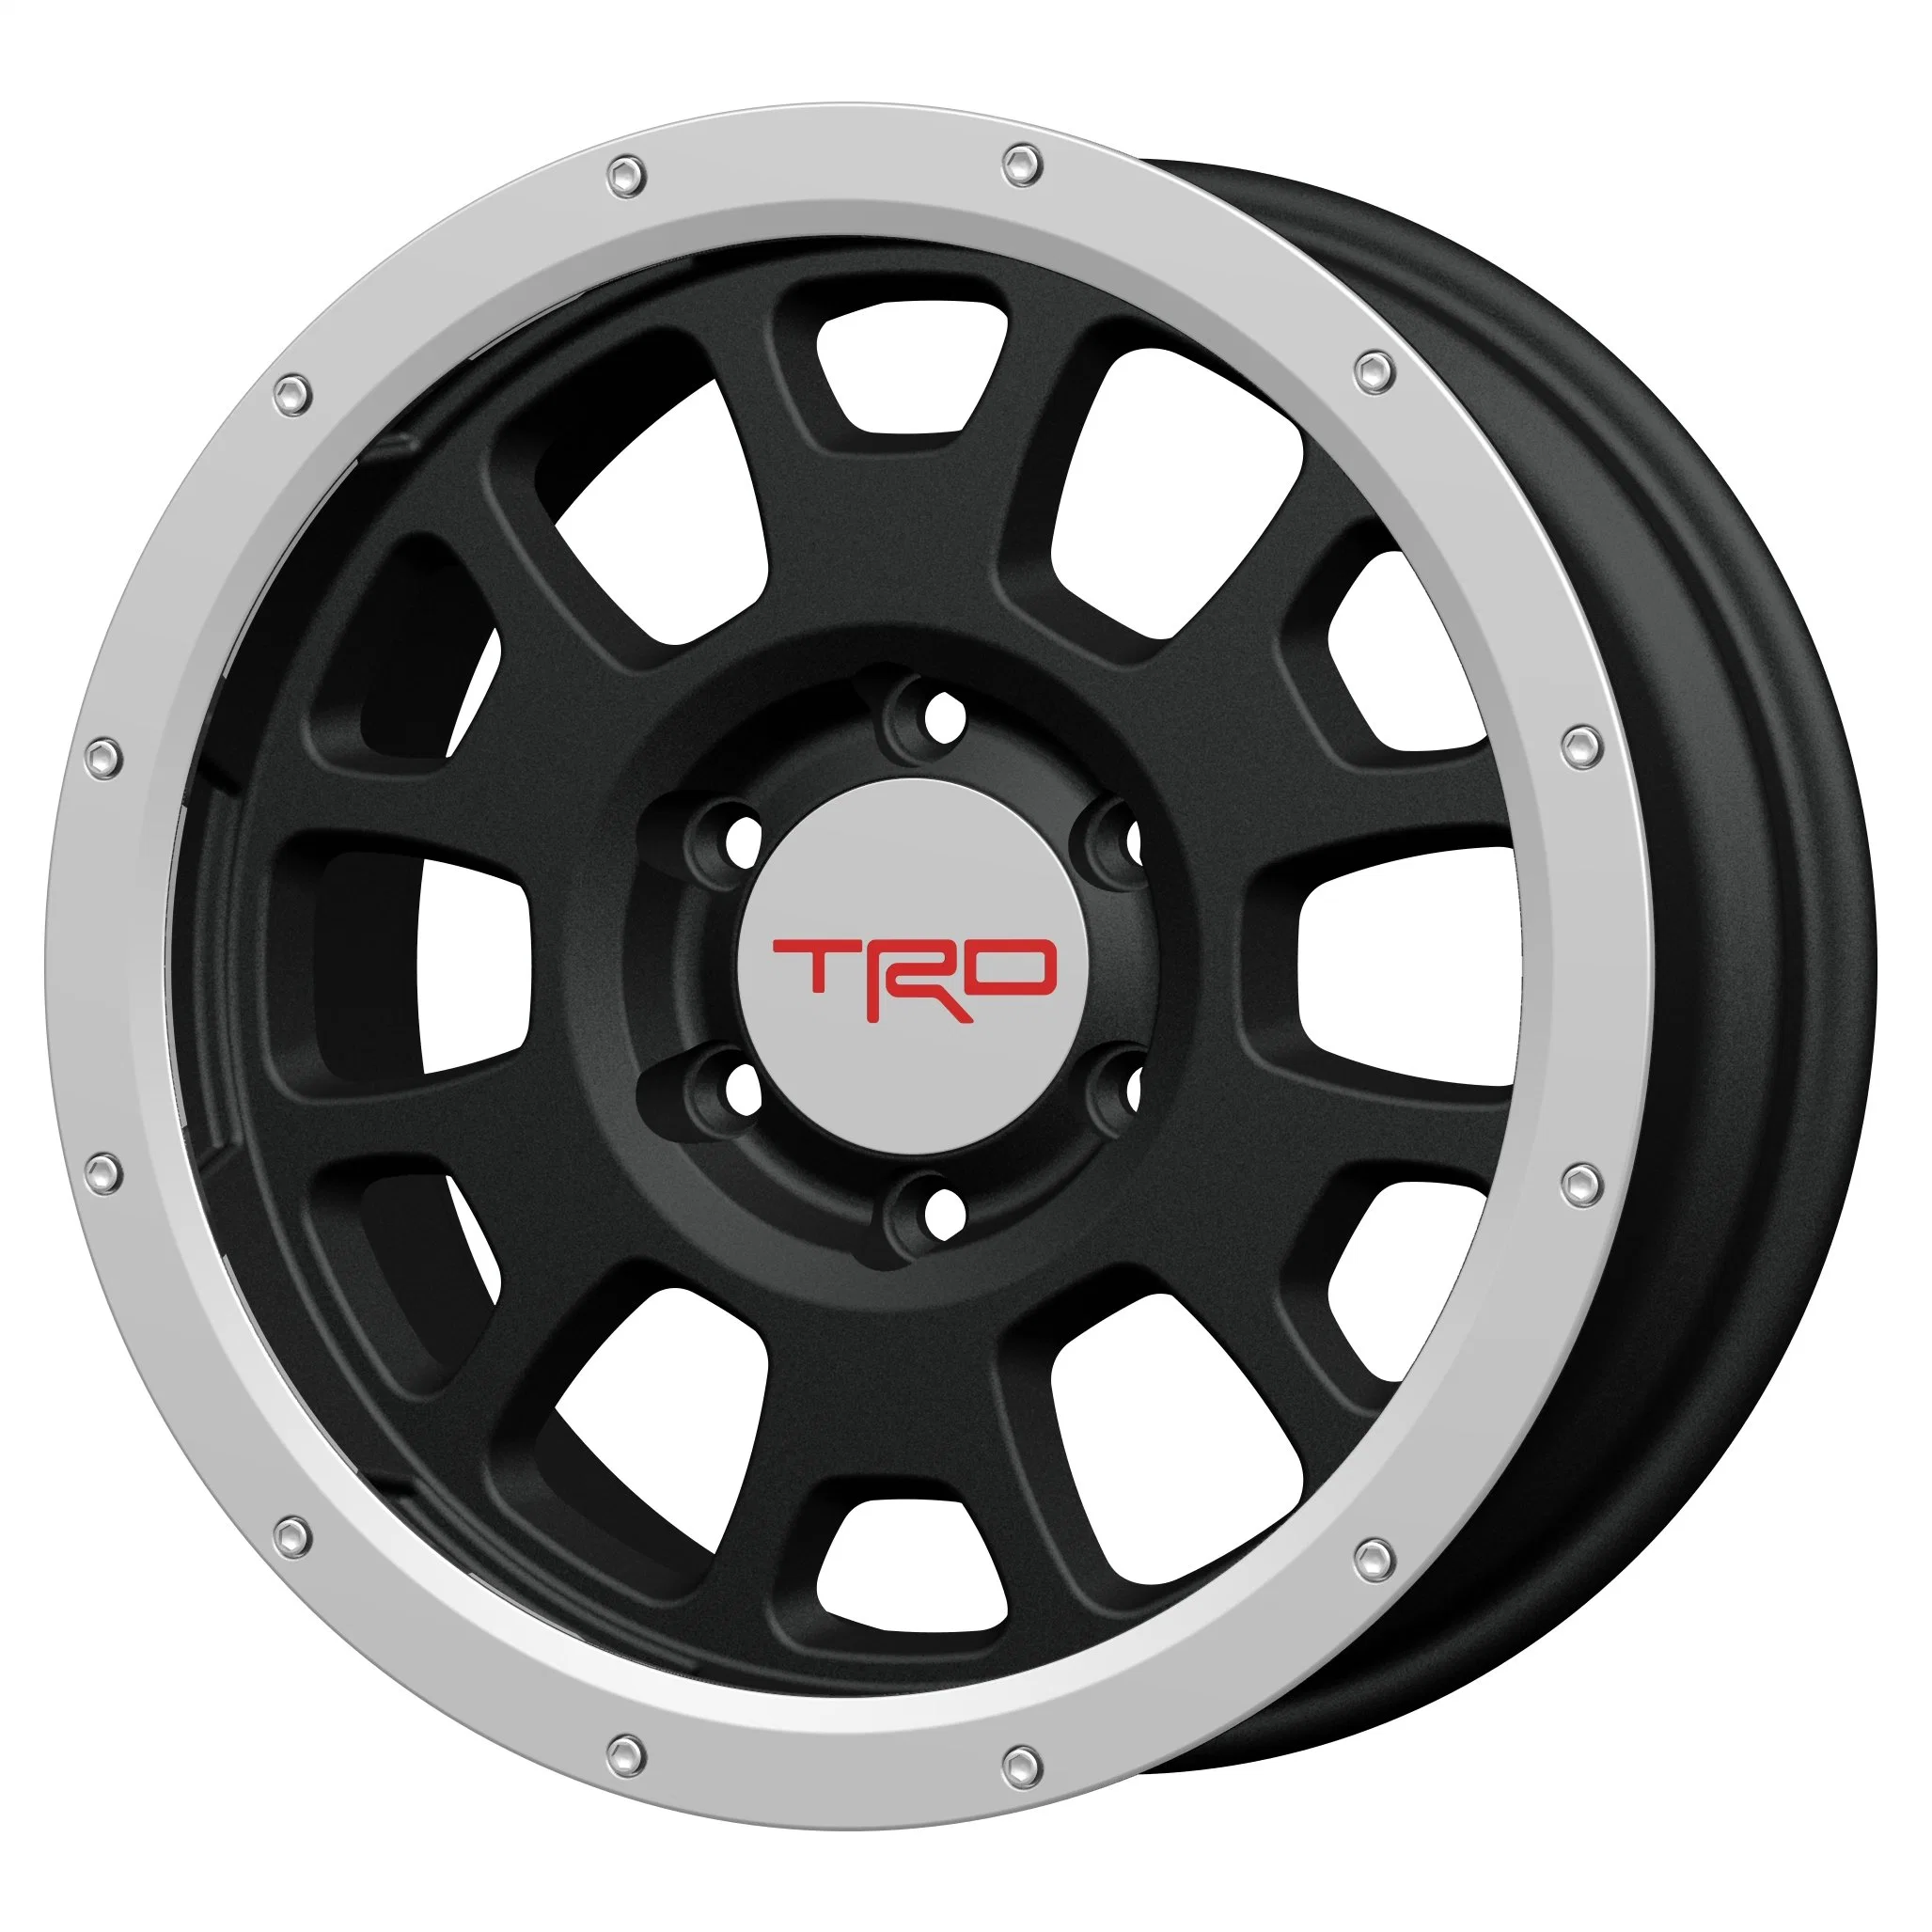 TRD/Black Rhino Alloy Wheels Replica car aluminium Wheels Fabricant